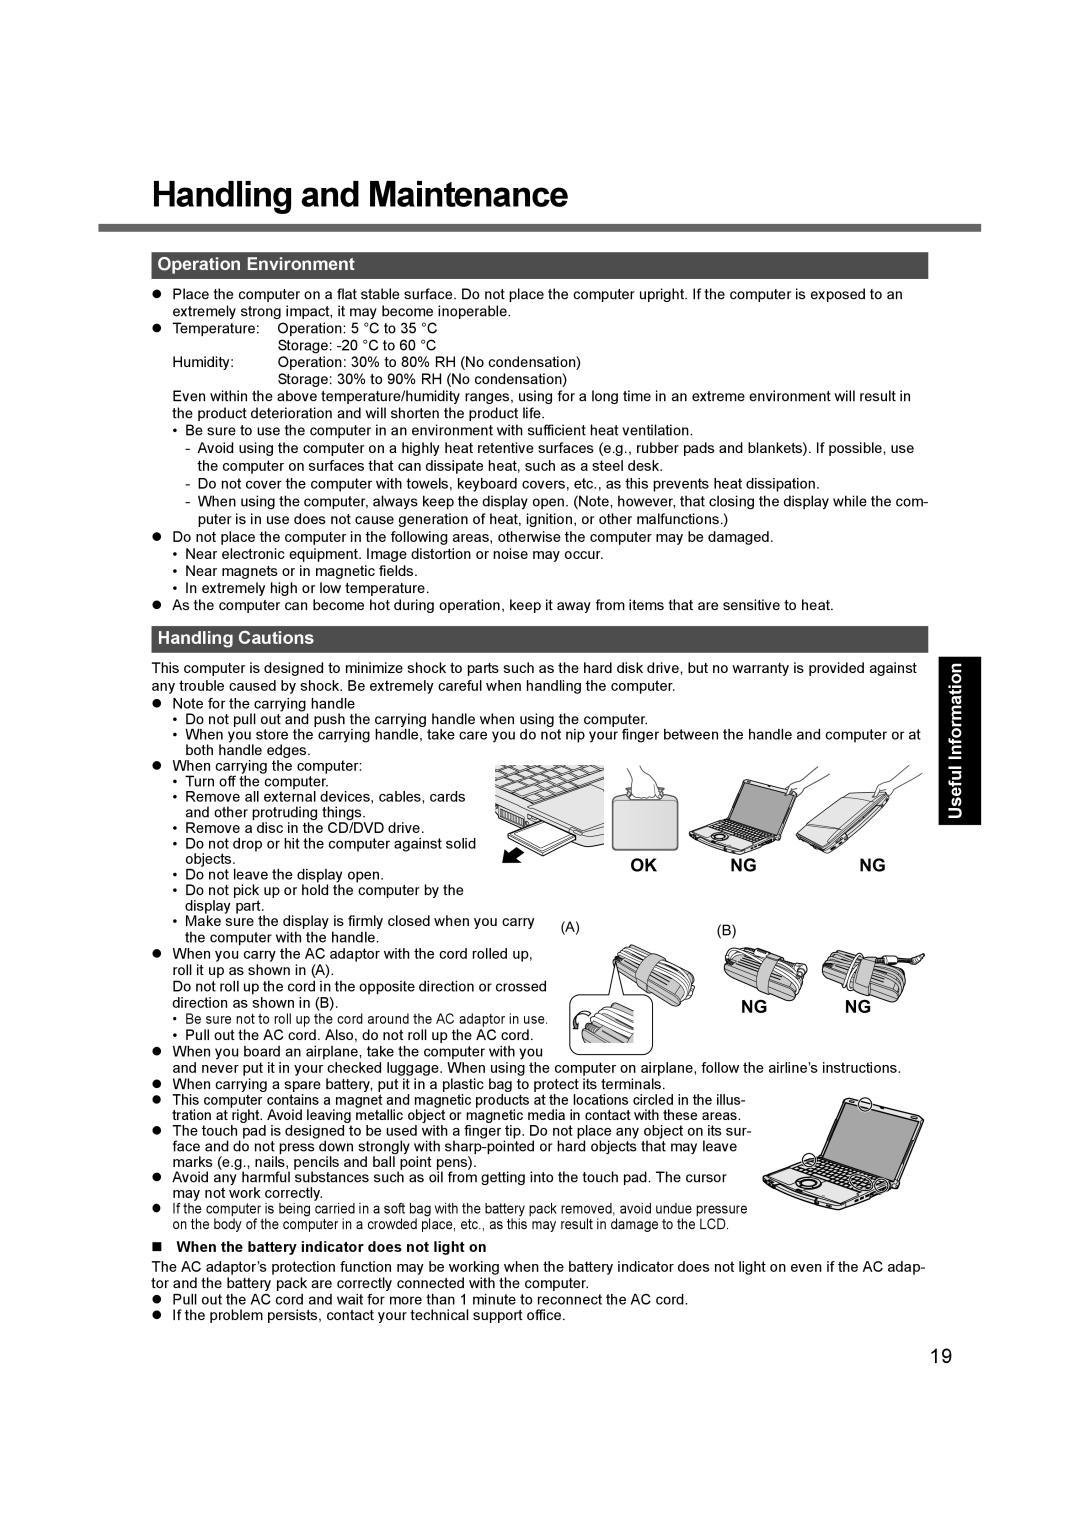 Panasonic CF-F9 appendix Handling and Maintenance, Operation Environment, Handling Cautions 